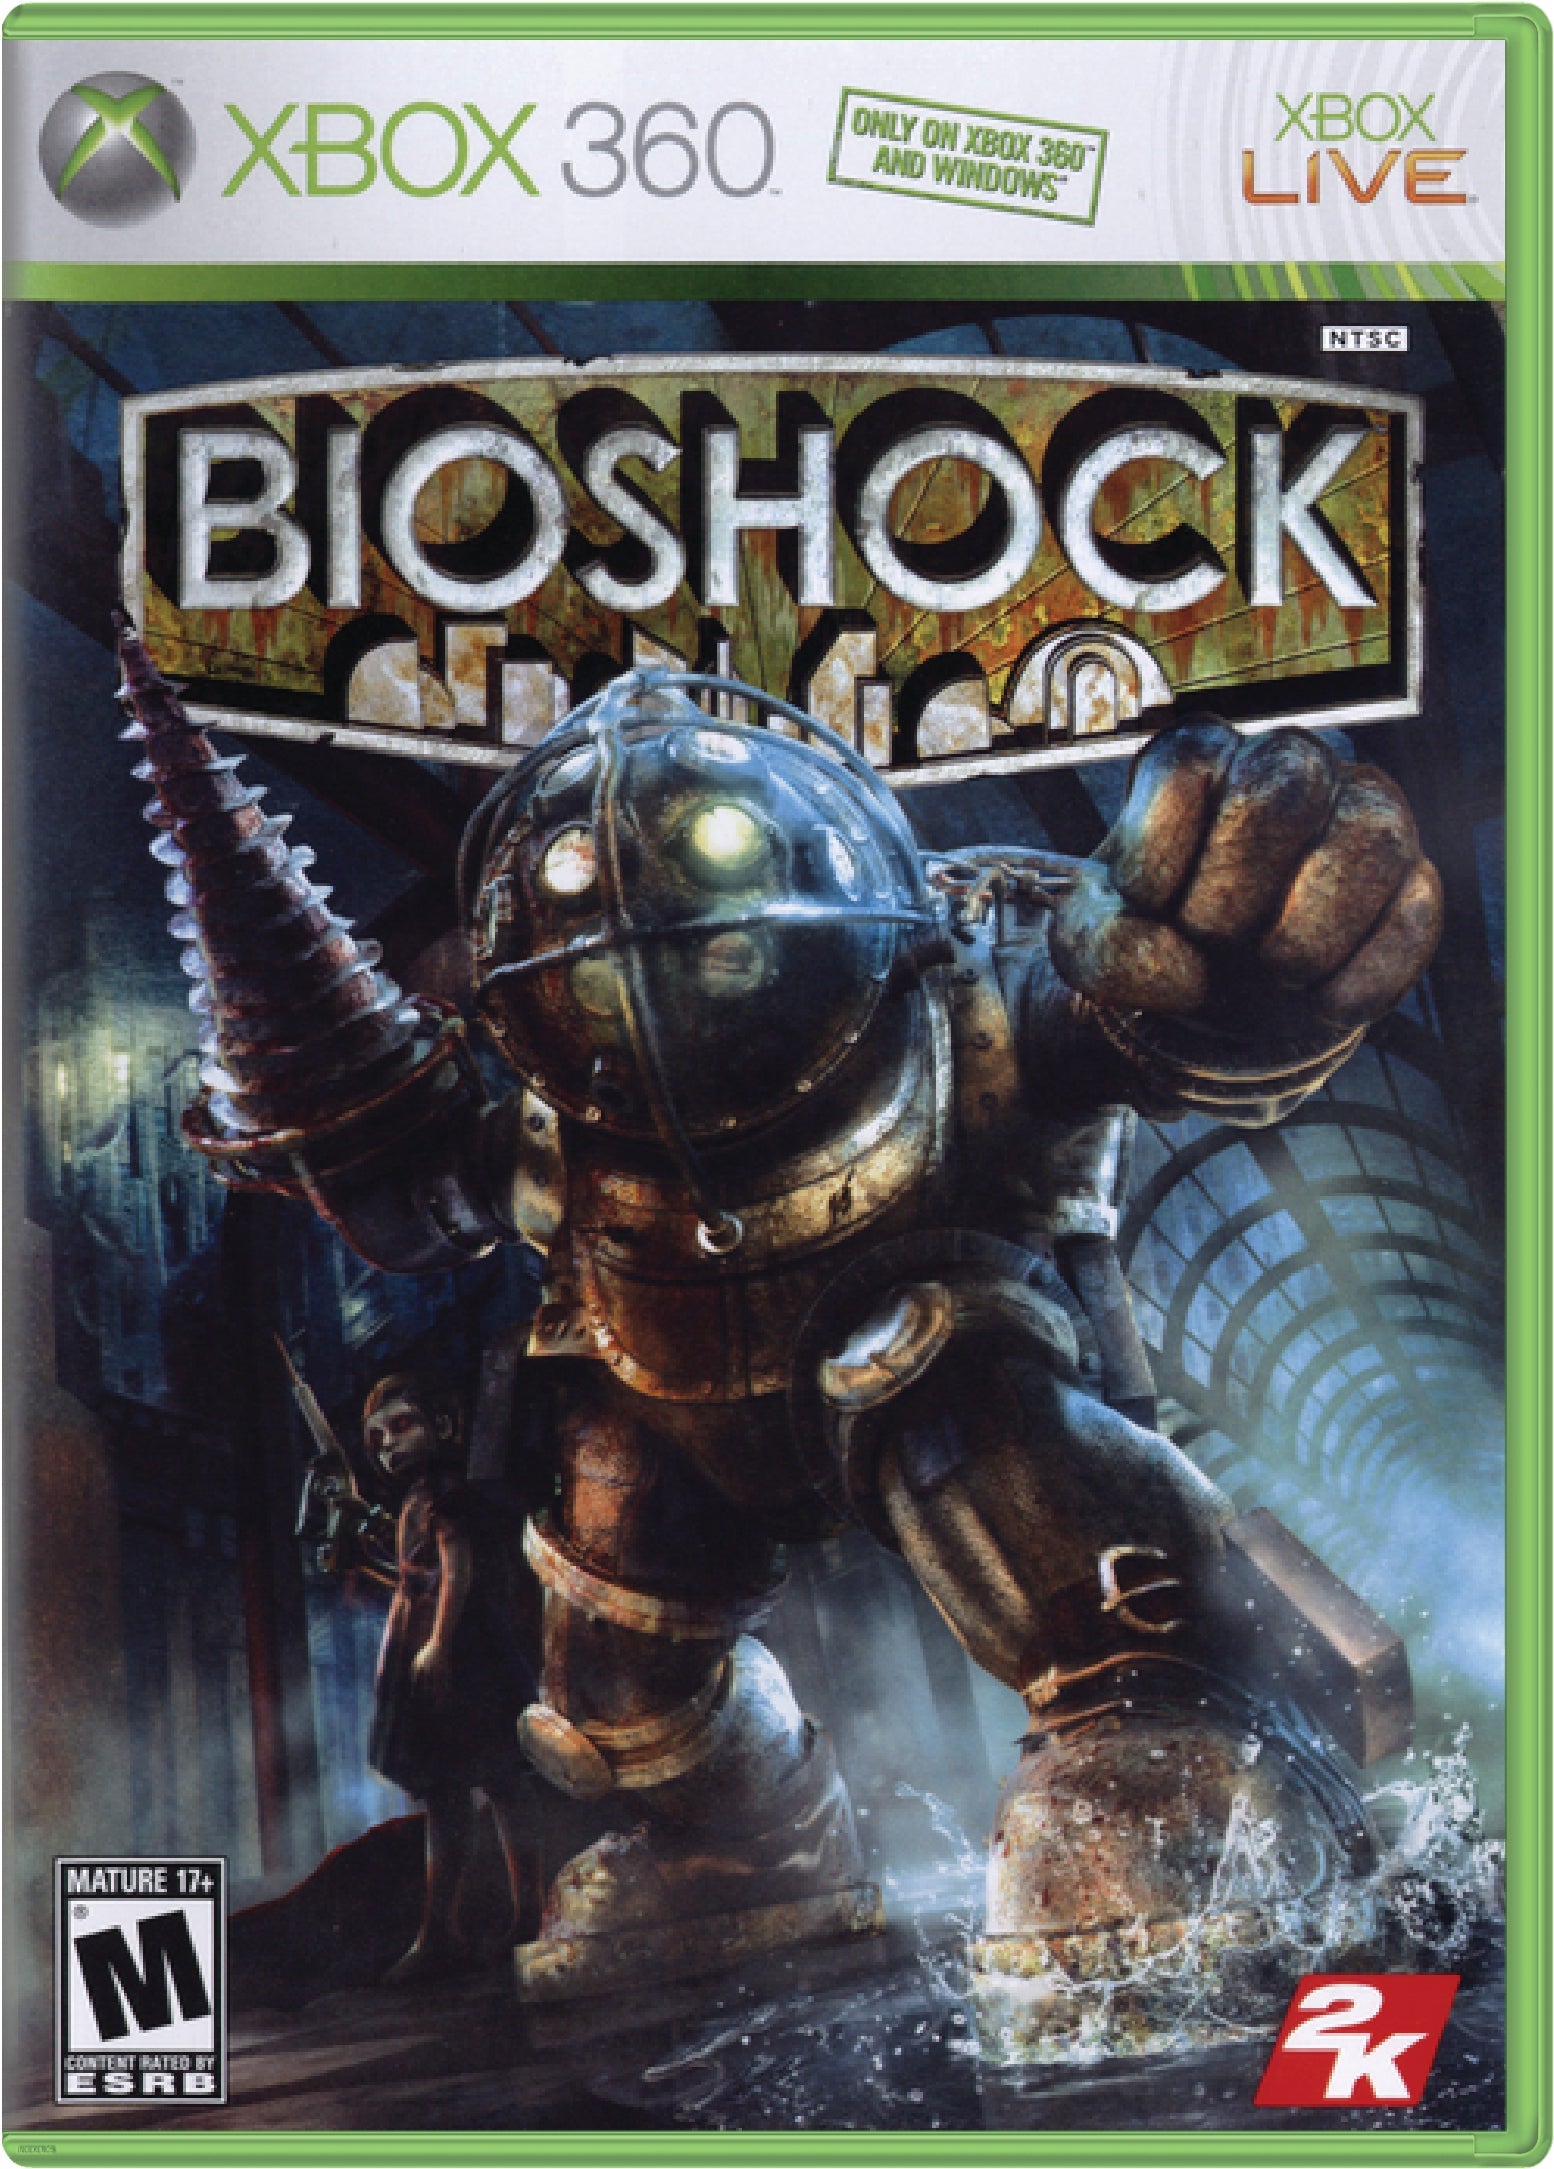 Bioshock Cover Art